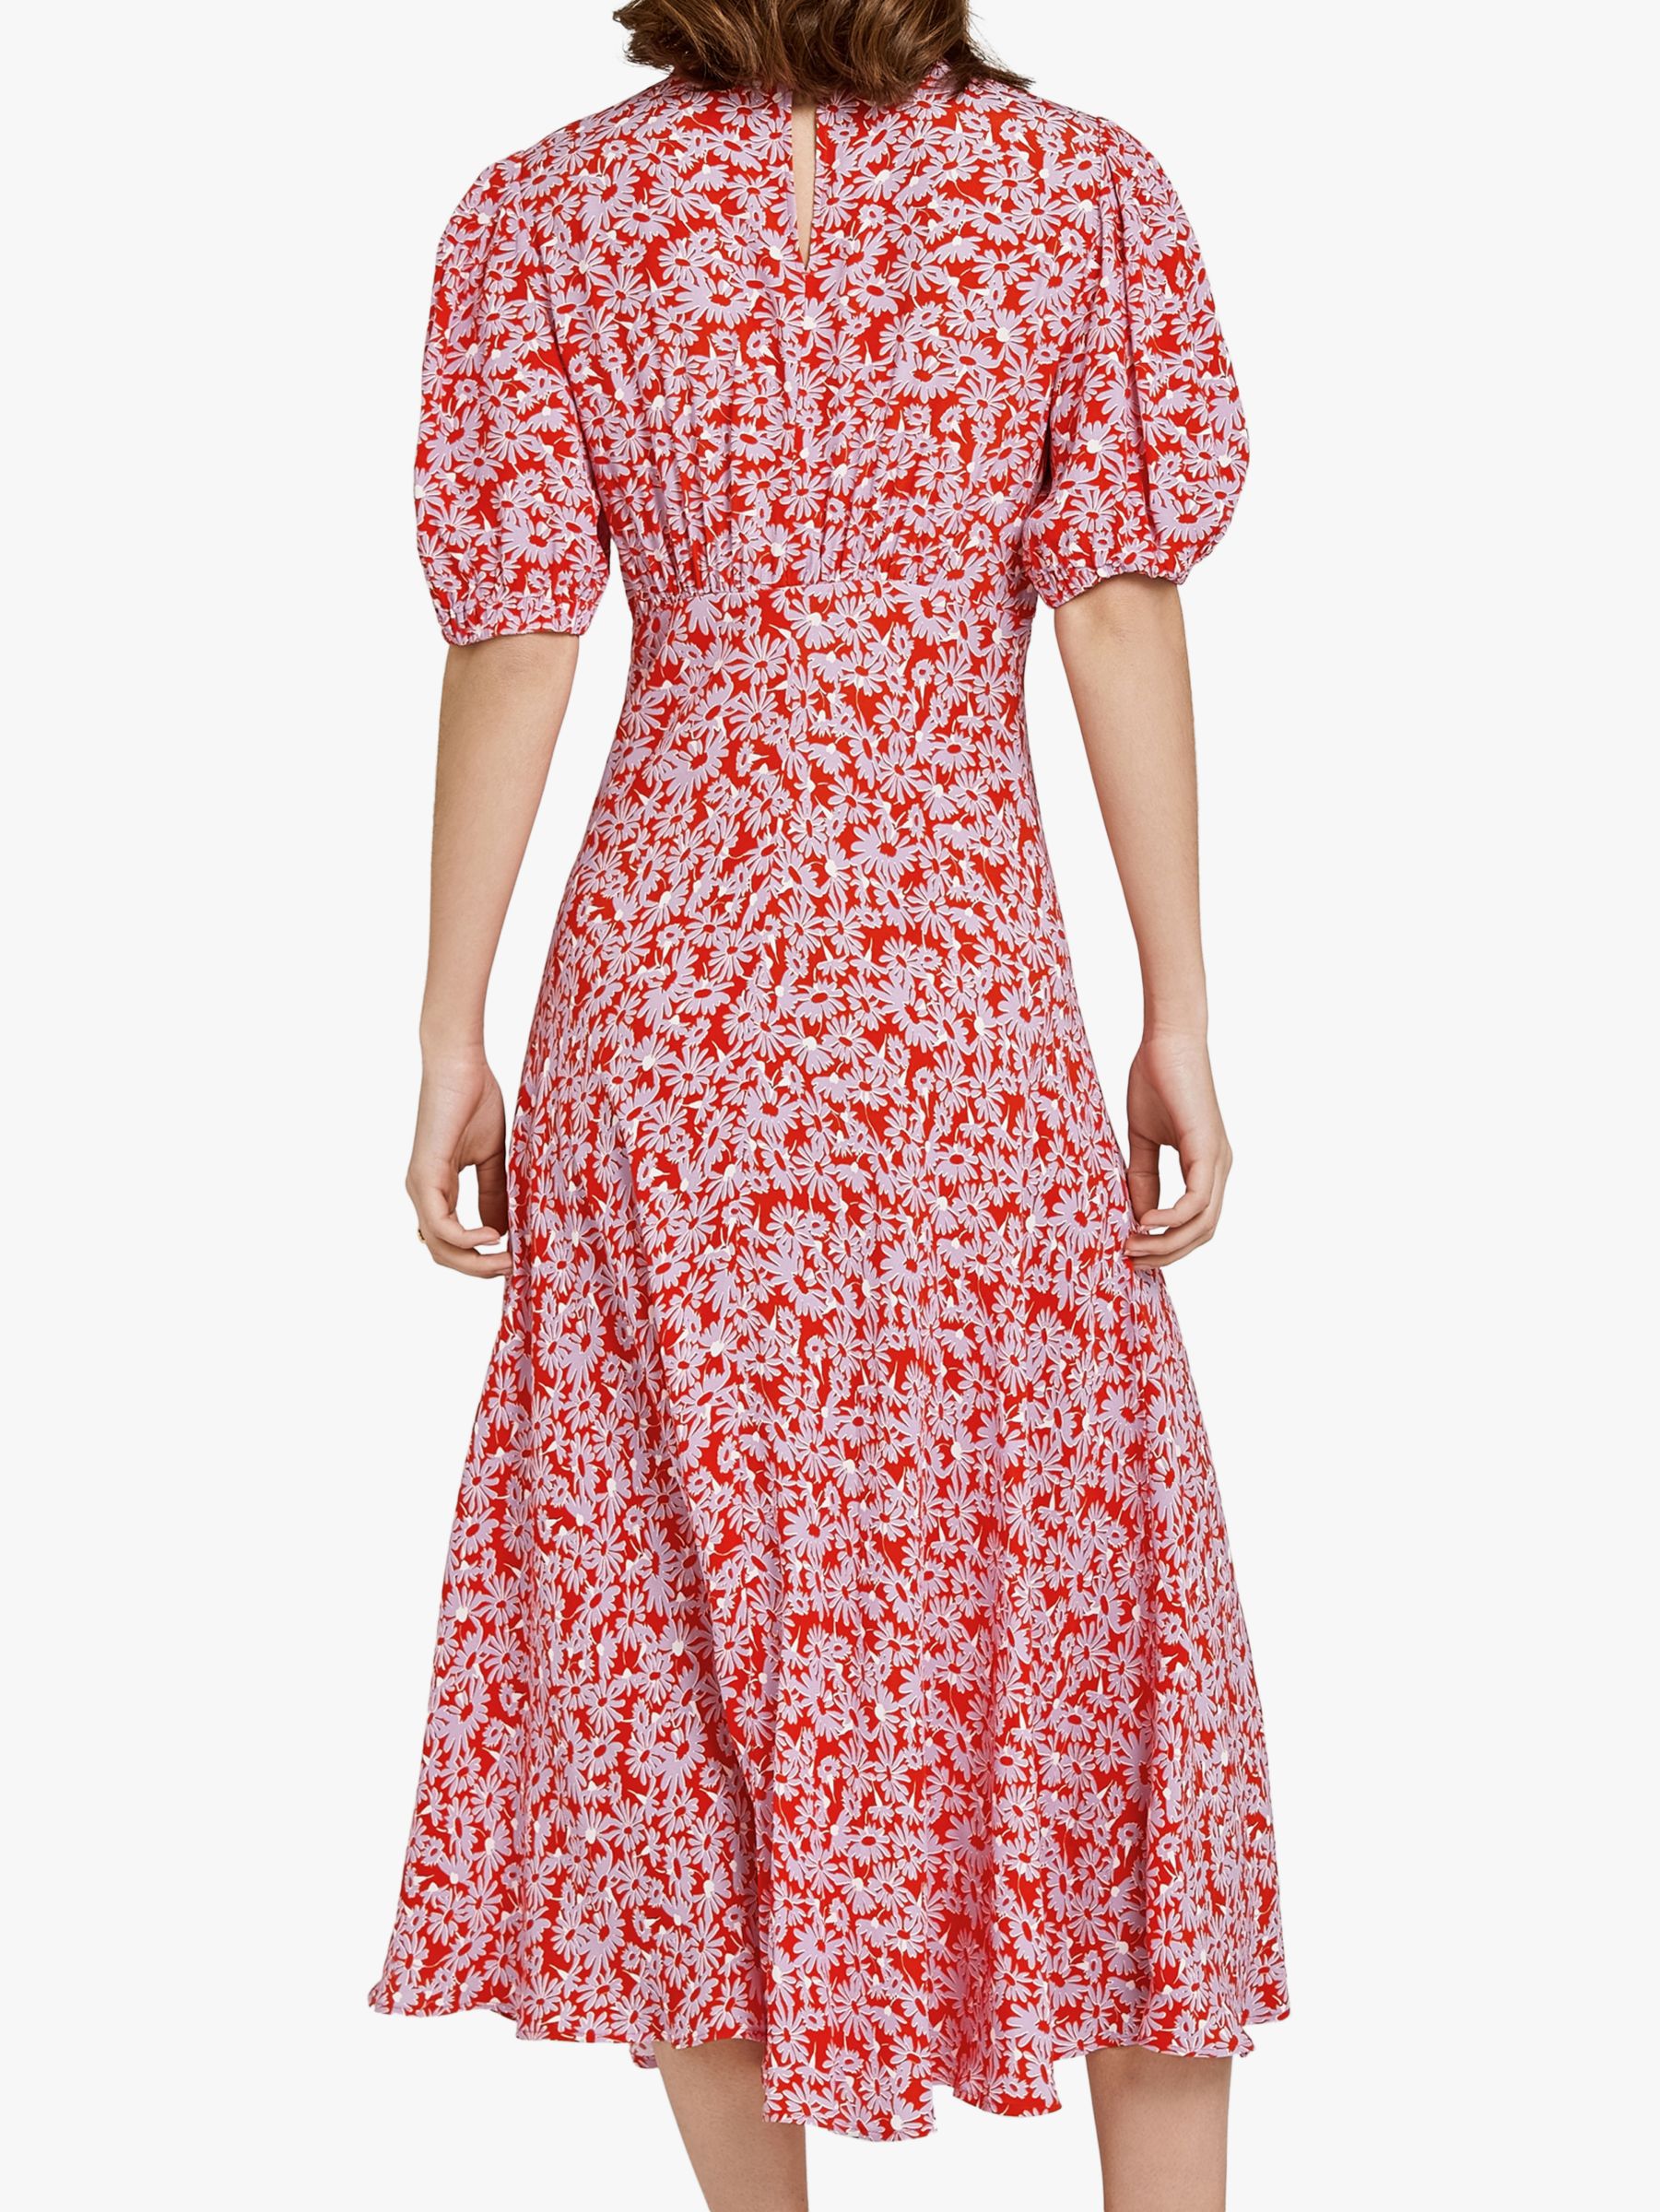 Ghost Luella Midi Dress, Shadowed Daisy Red at John Lewis & Partners